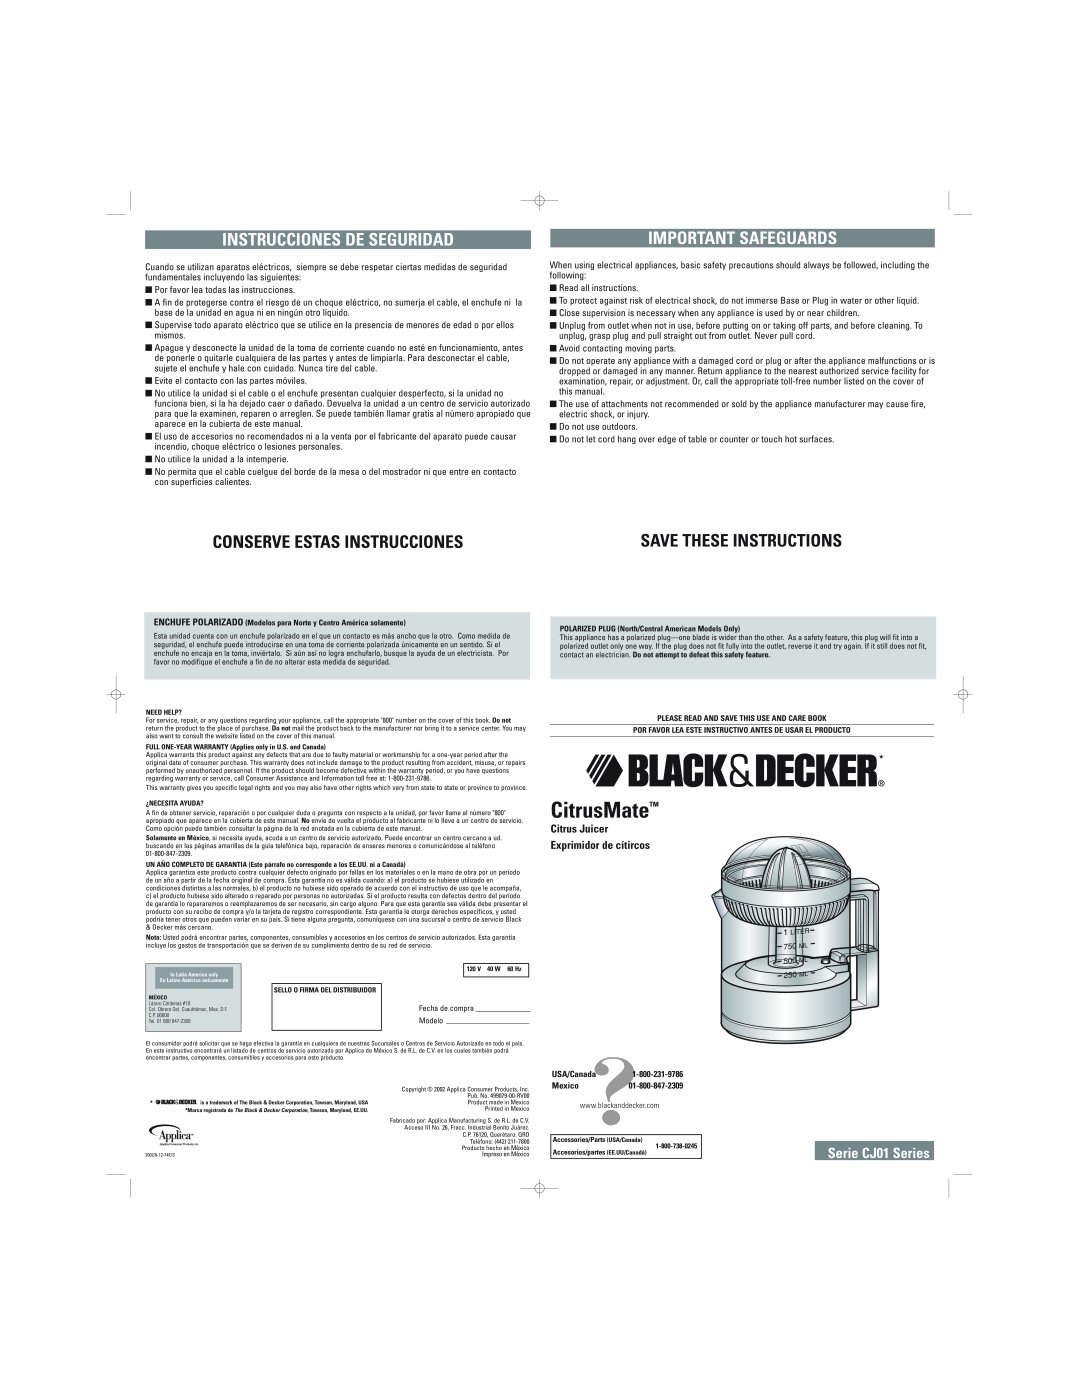 Black & Decker warranty Serie CJ01 Series, CitrusMate, Instrucciones De Seguridad, Important Safeguards 